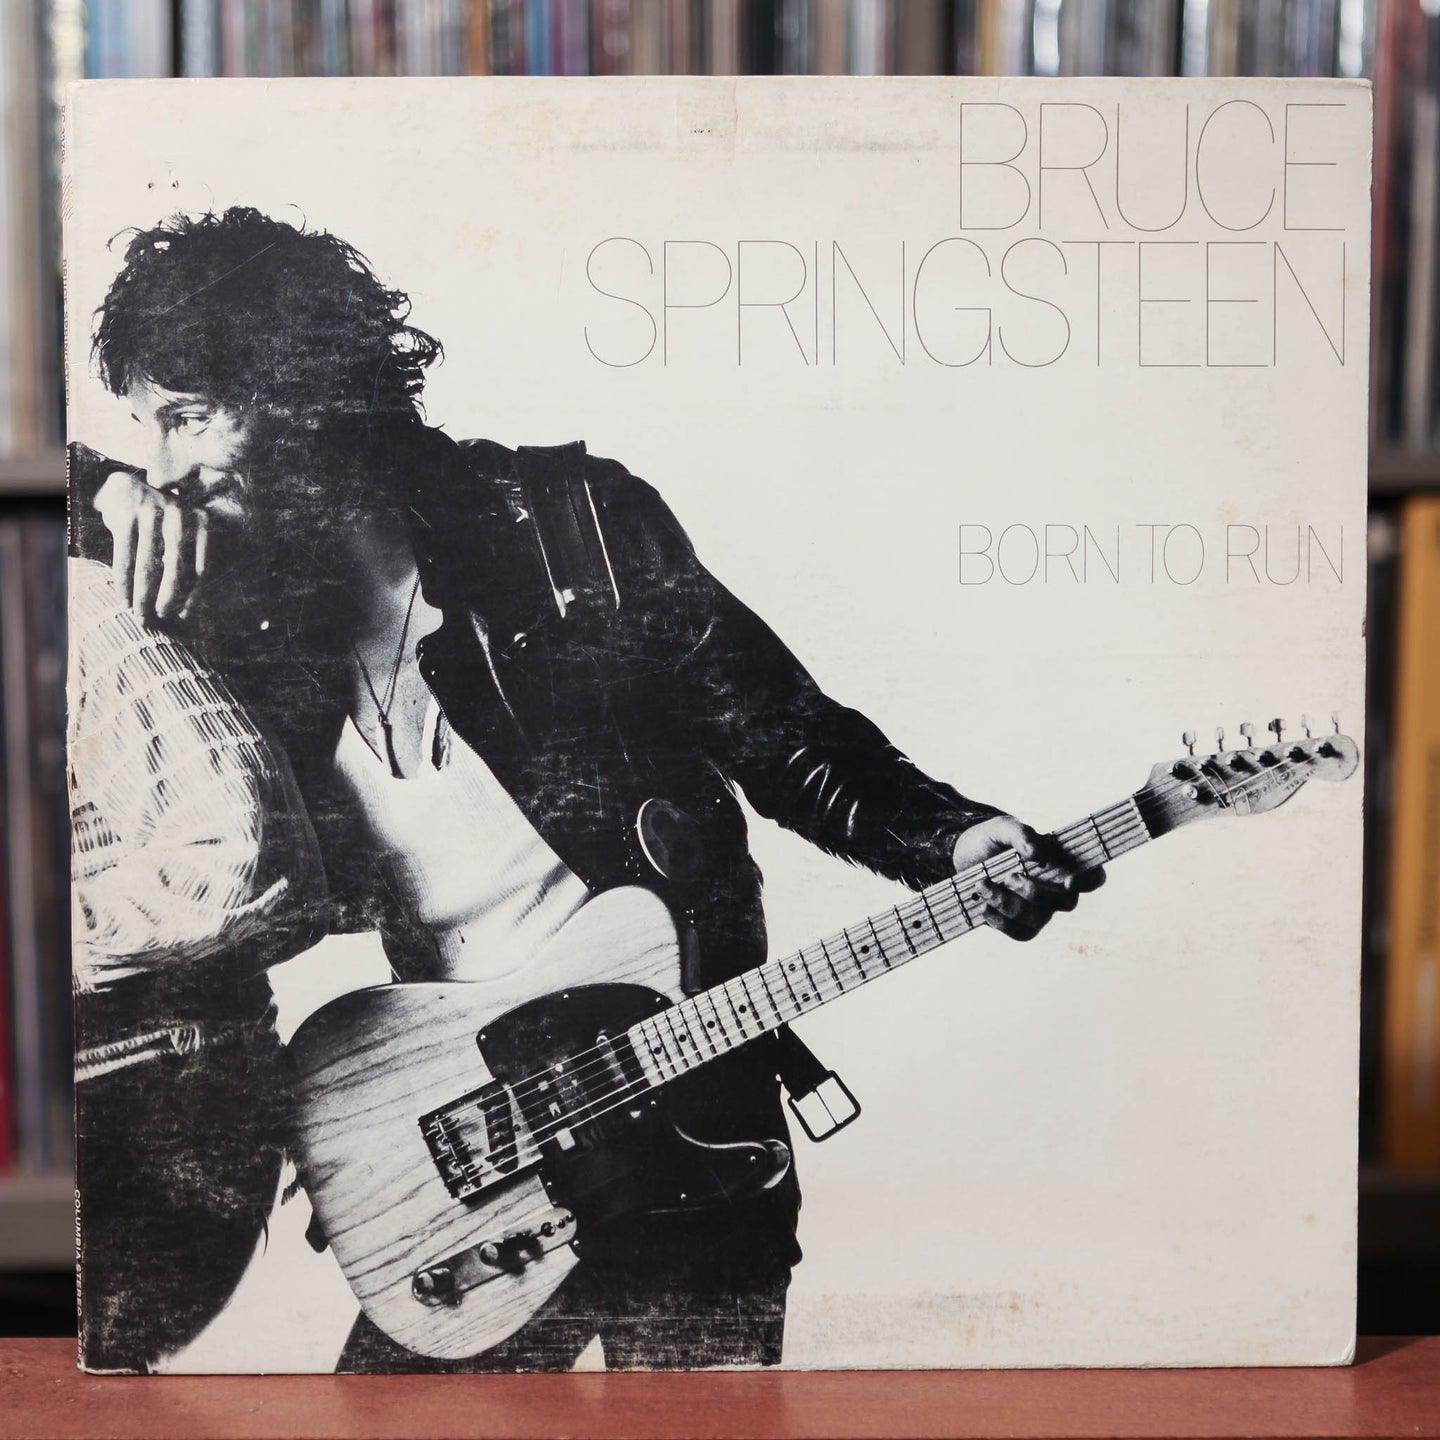 Bruce Springsteen - Born To Run. - 1975  Columbia, VG/VG